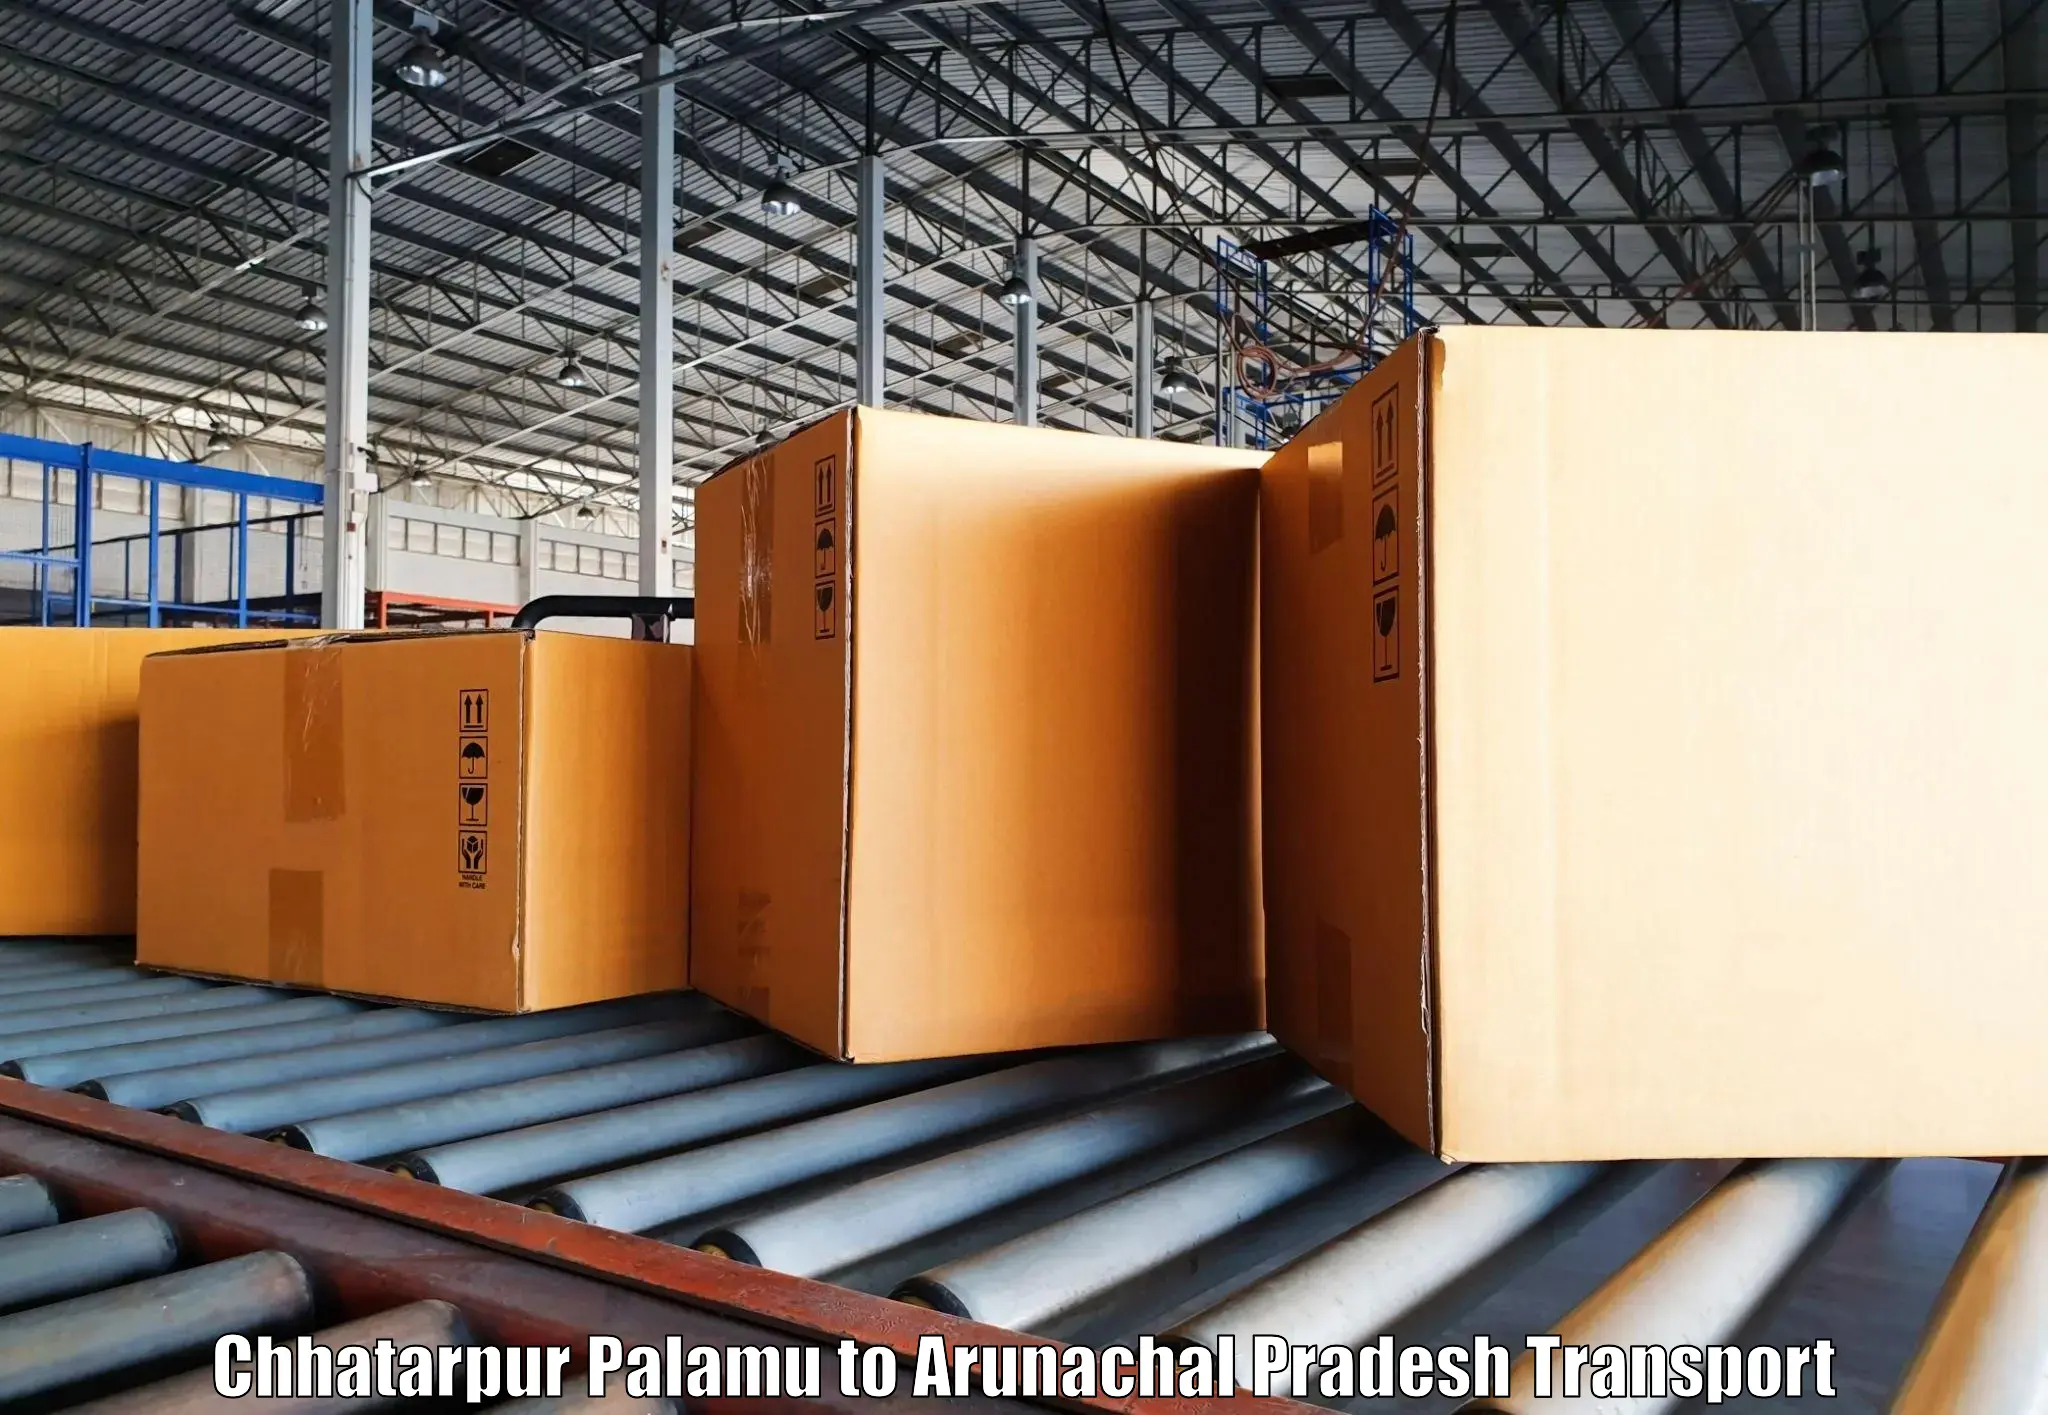 Shipping partner Chhatarpur Palamu to Pasighat